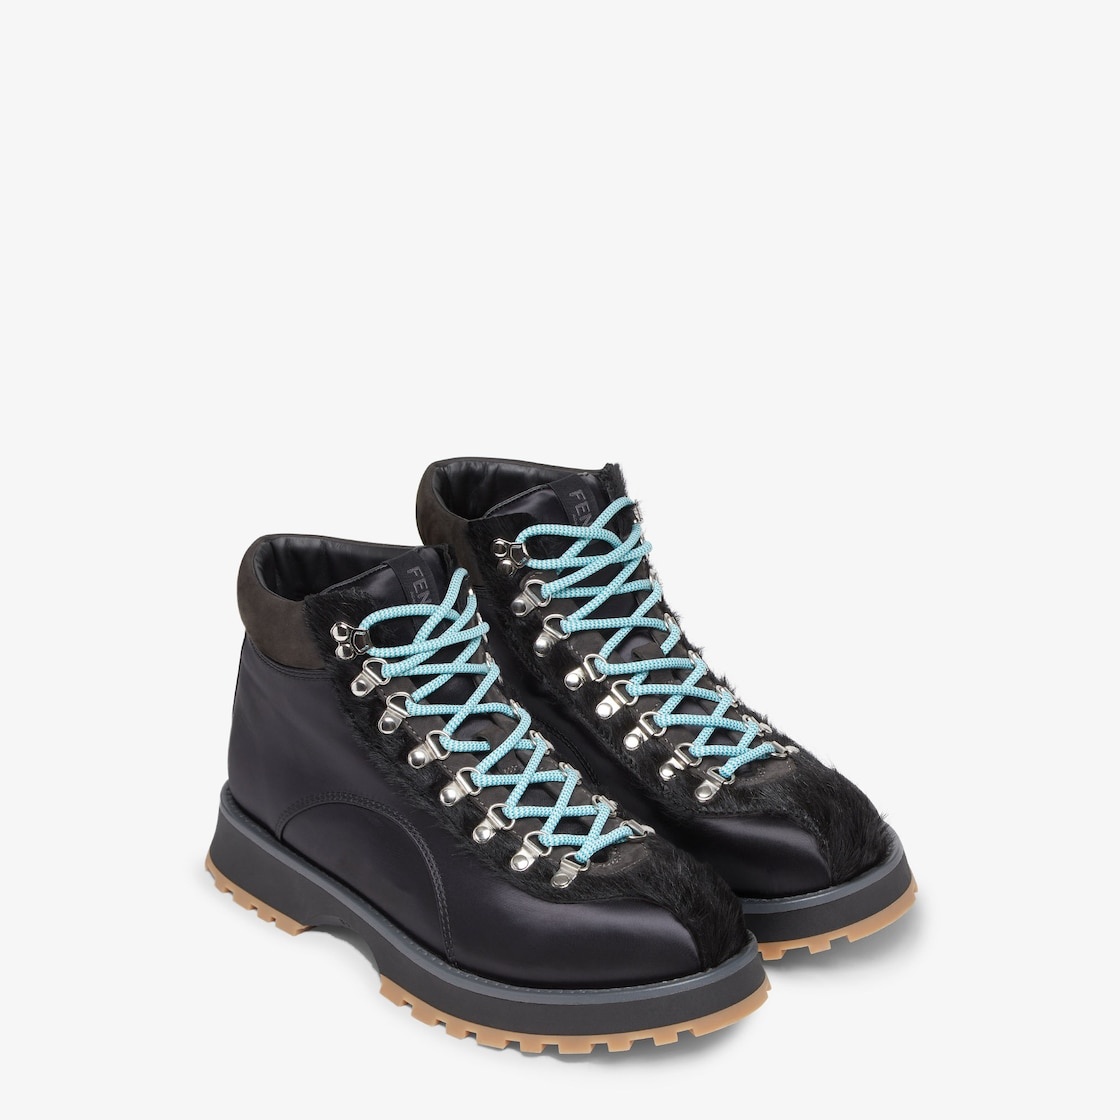 Black nylon boots - 5